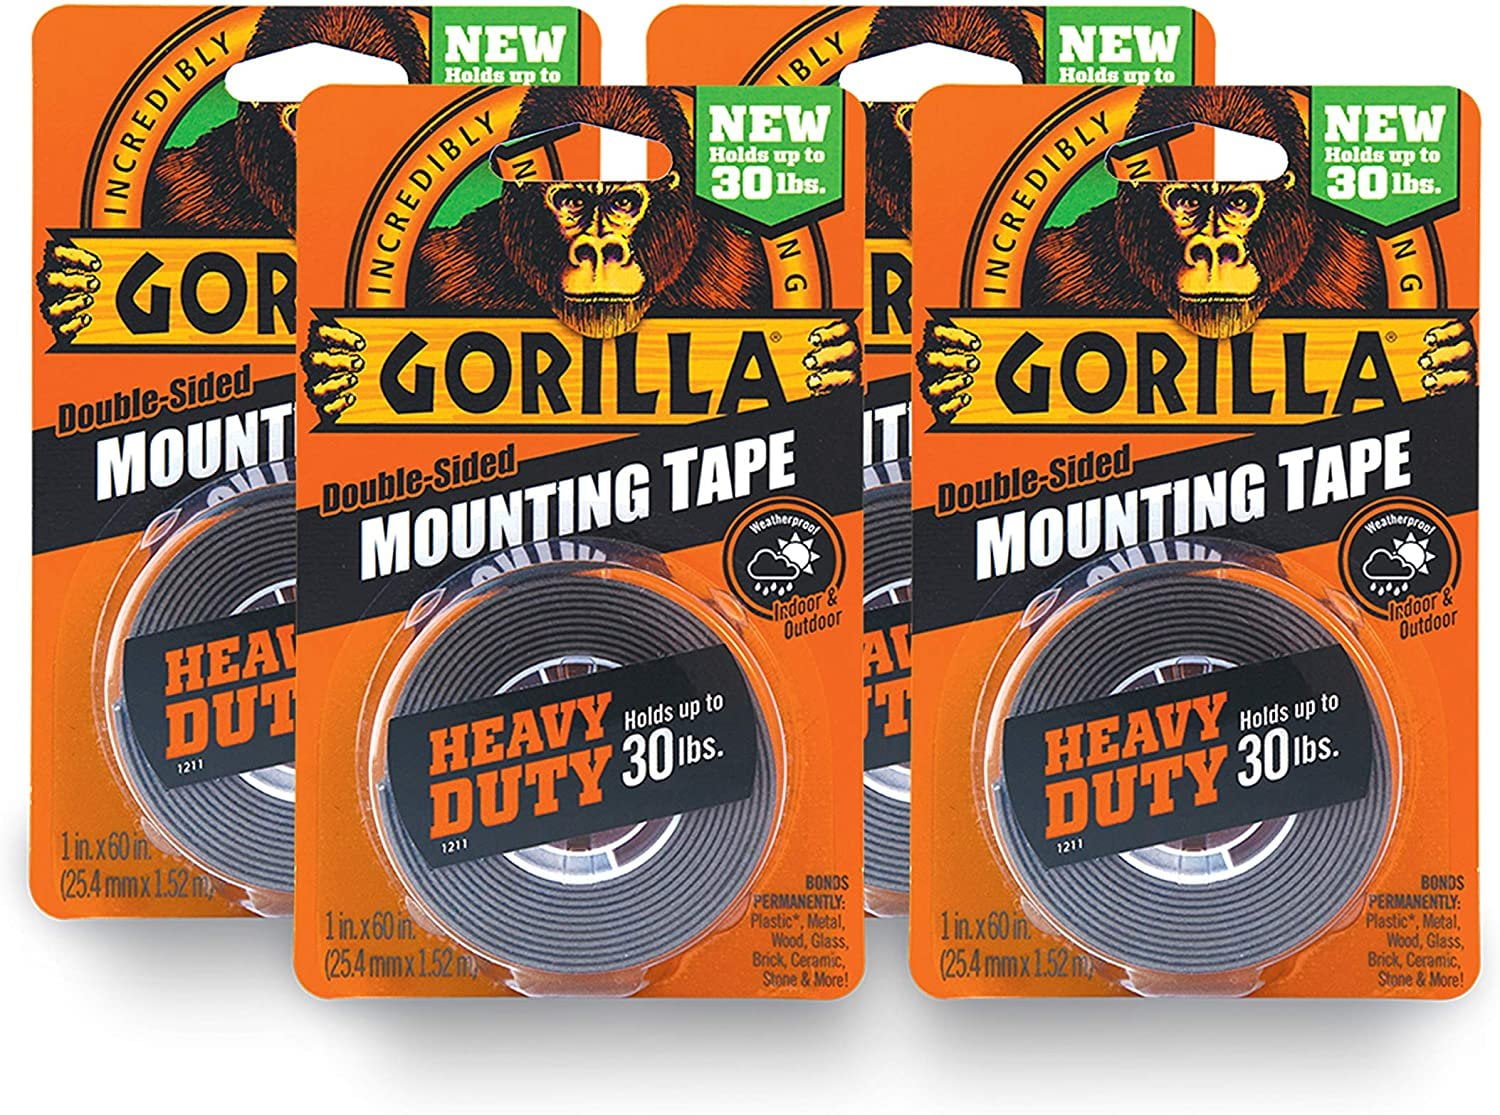 gorilla heavy duty mounting tape